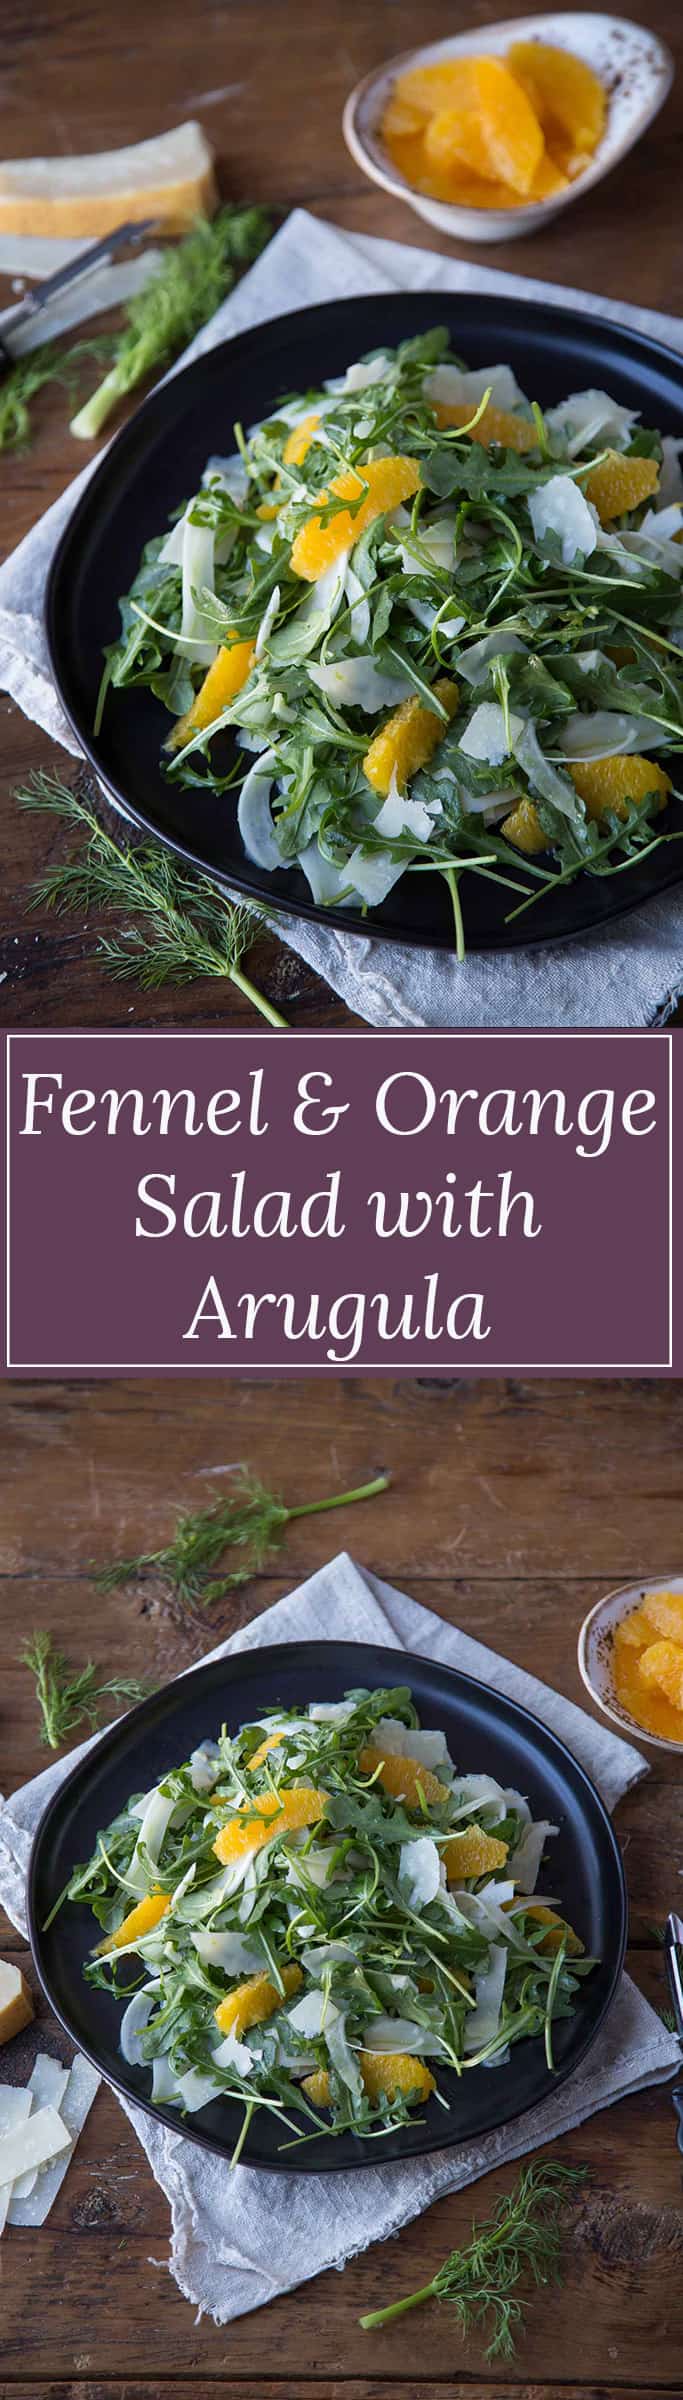 Fennel and Orange Salad with Arugula